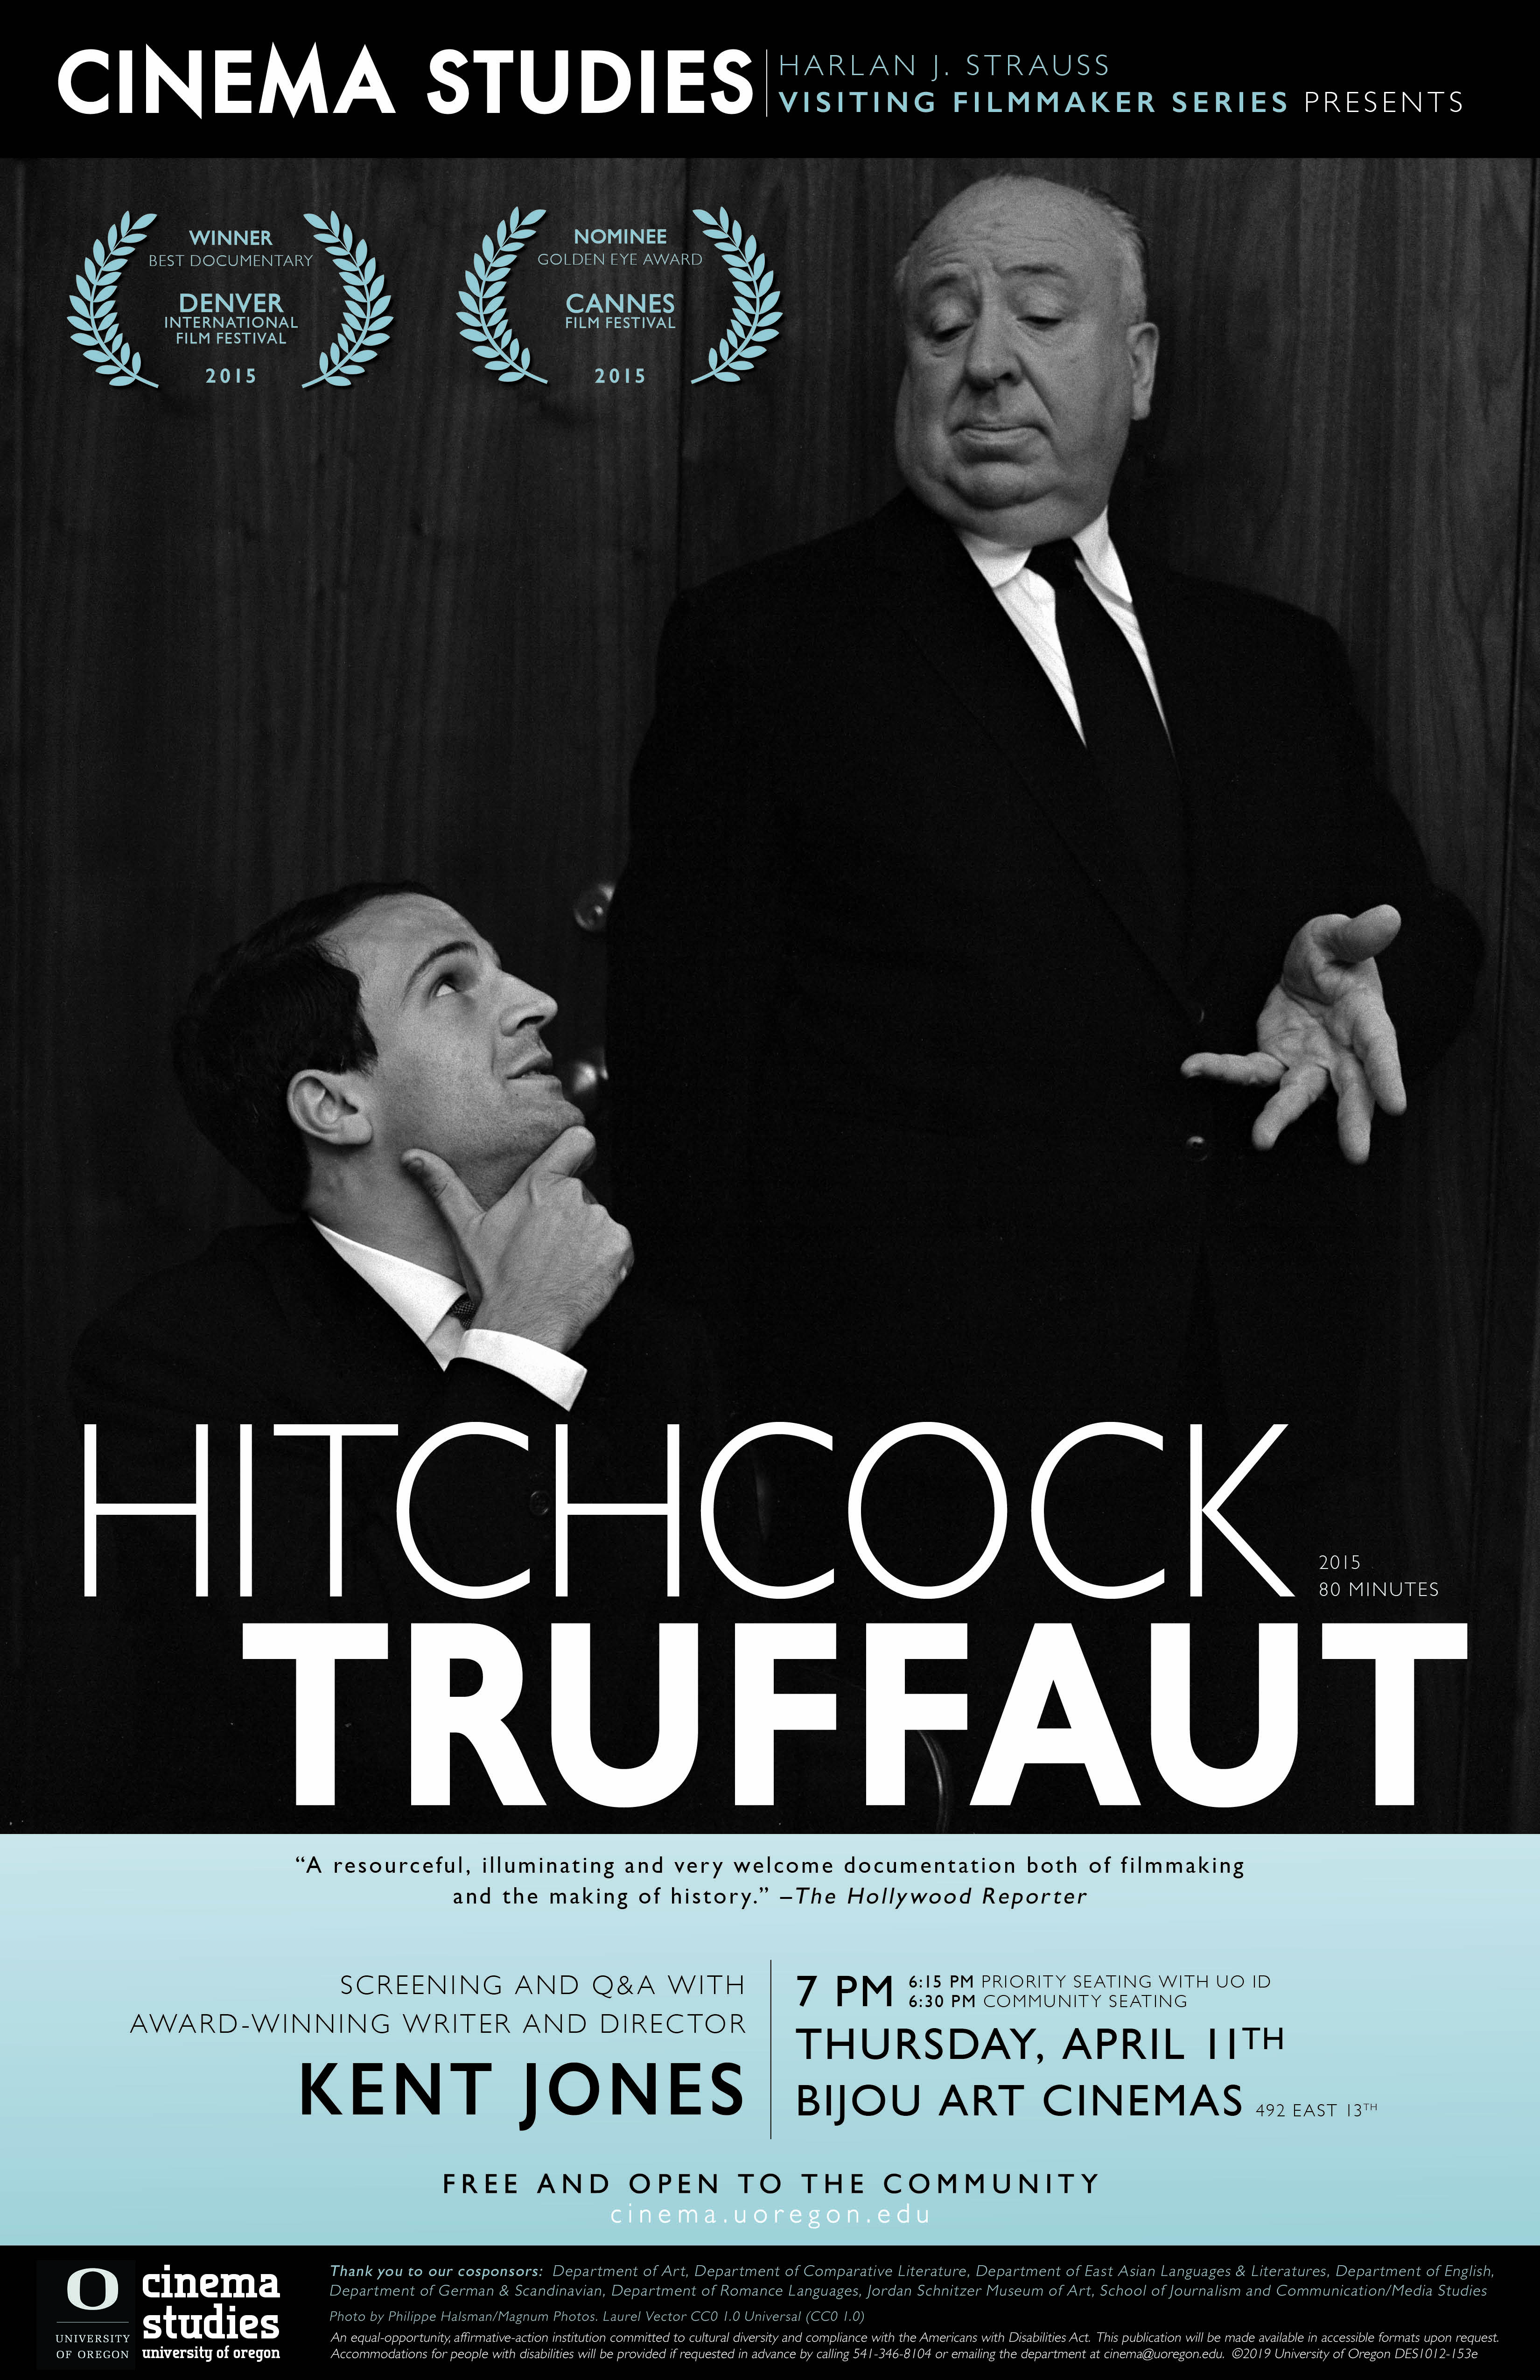 Hitchcock Truffaut Screening